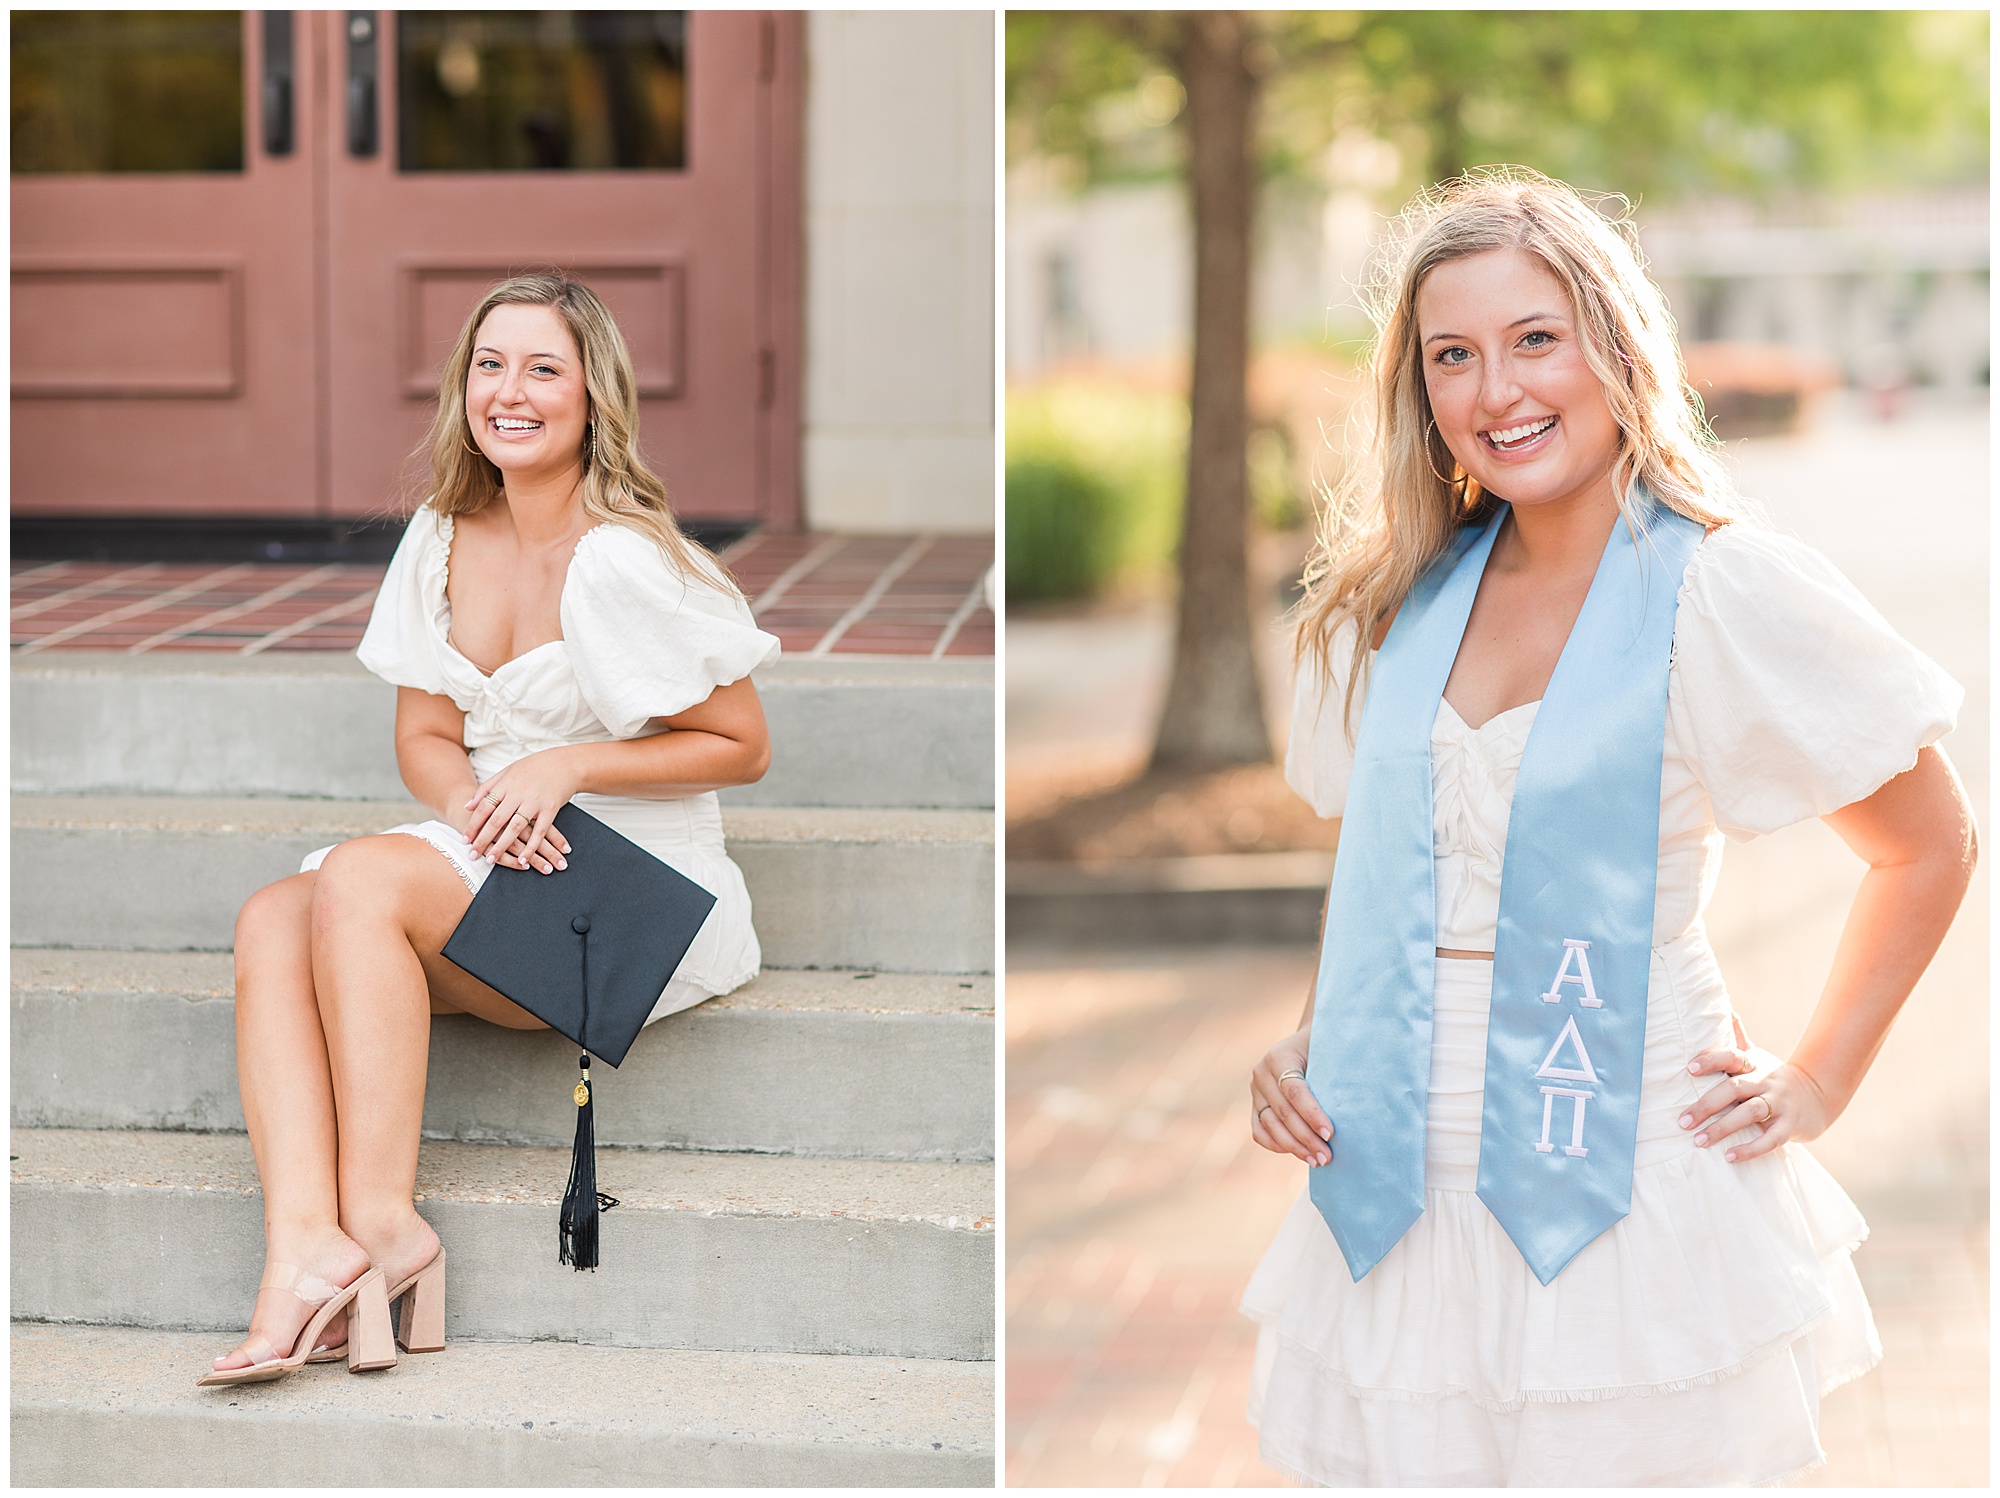 Bailey, Graduation Photos, Valdosta State University, Kelley Stinson Photography, sorority sash, graduation cap, white graduation dress